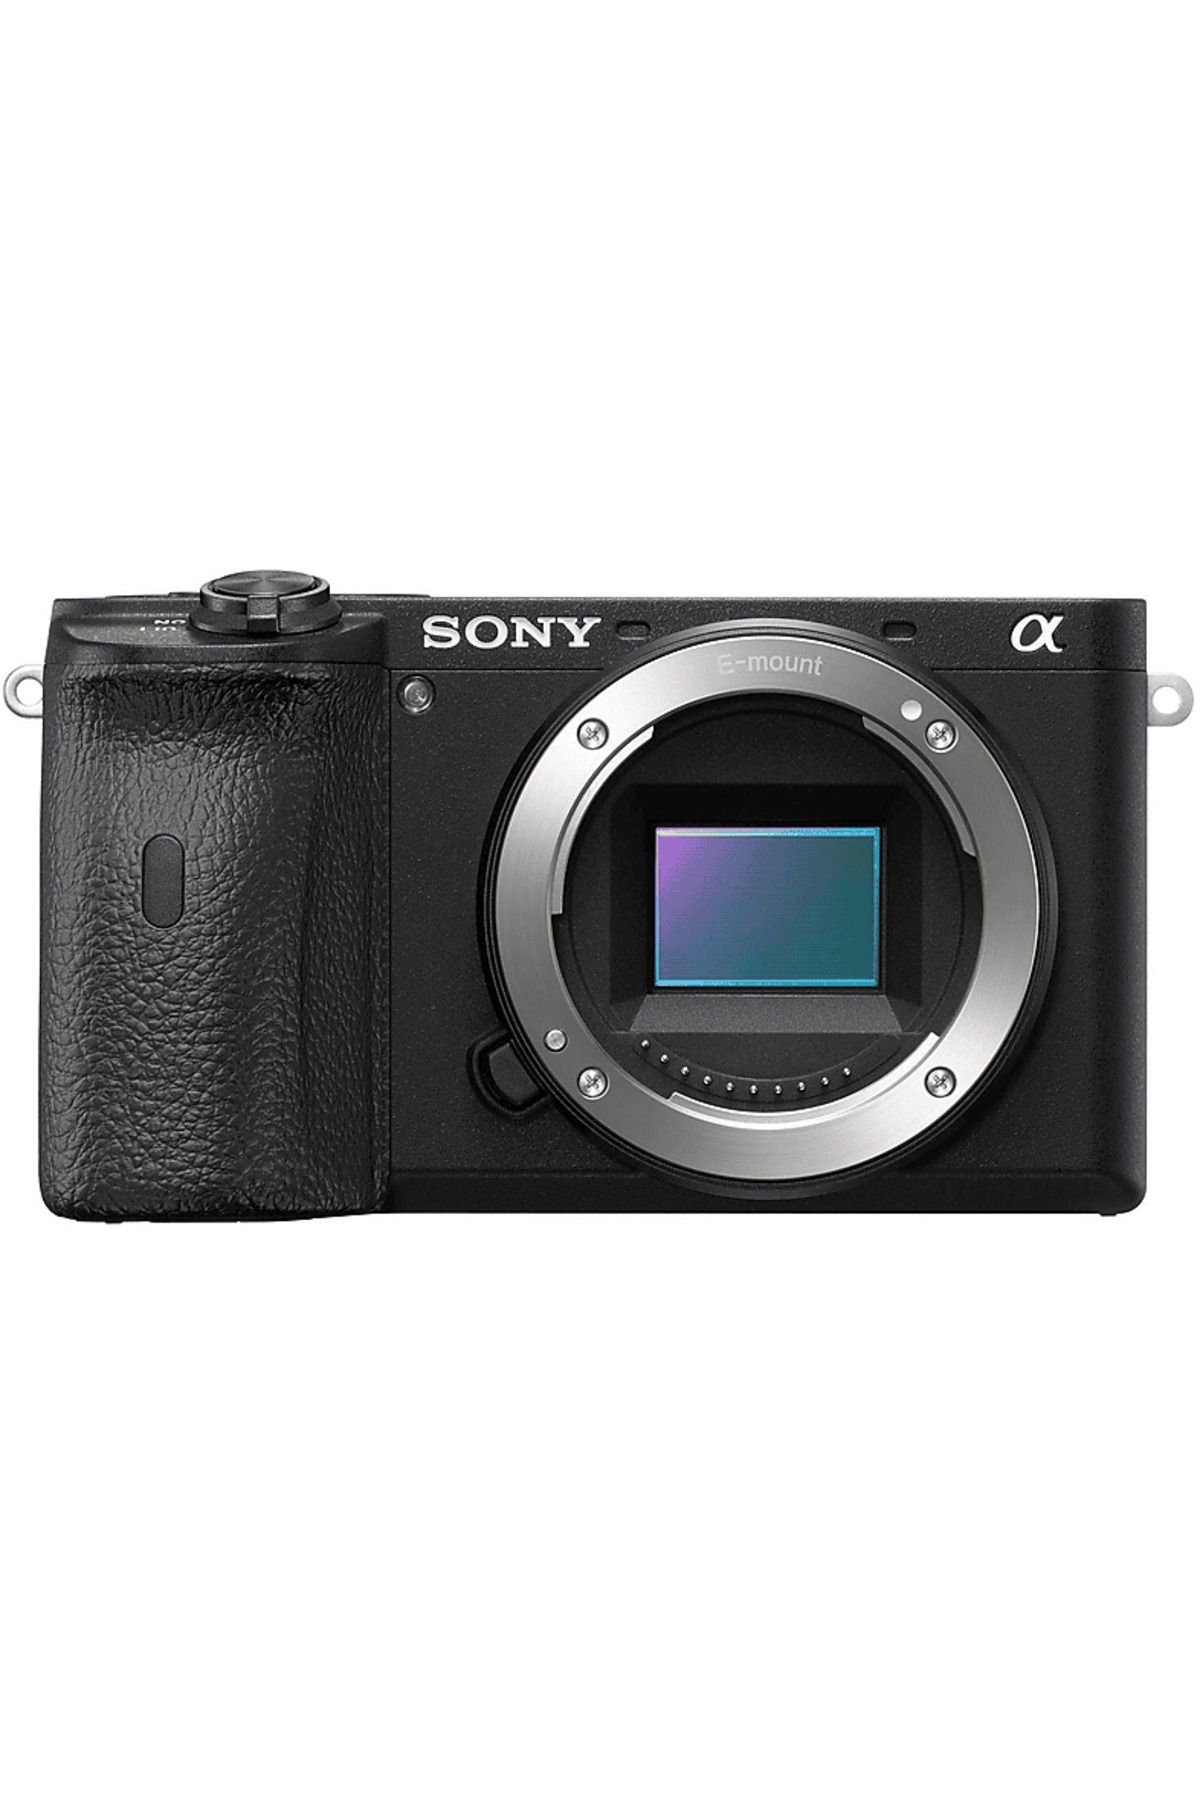 Sony iLCE-6600MB Fotoğraf Makinesi Siyah